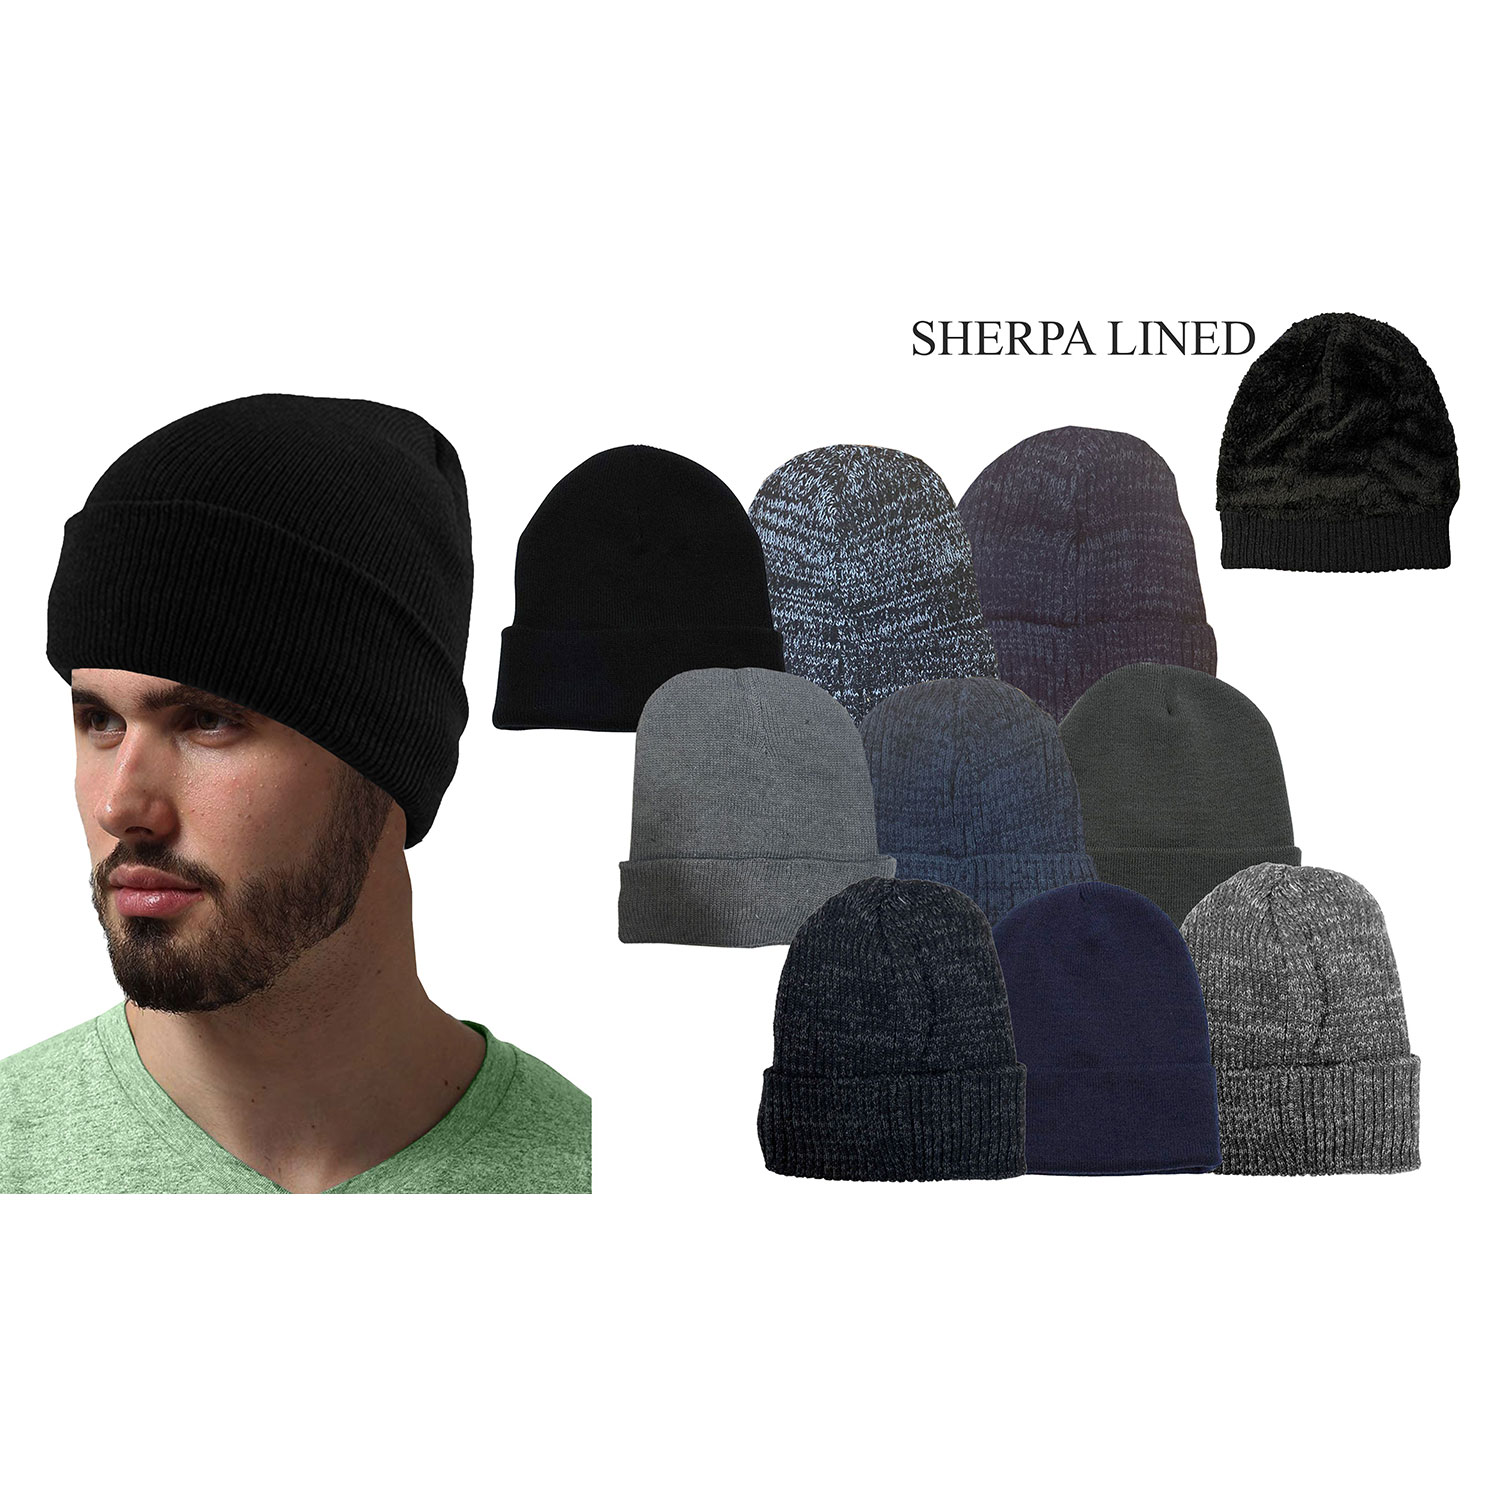 Men's 5-Piece Sherpa Winter Gift Set